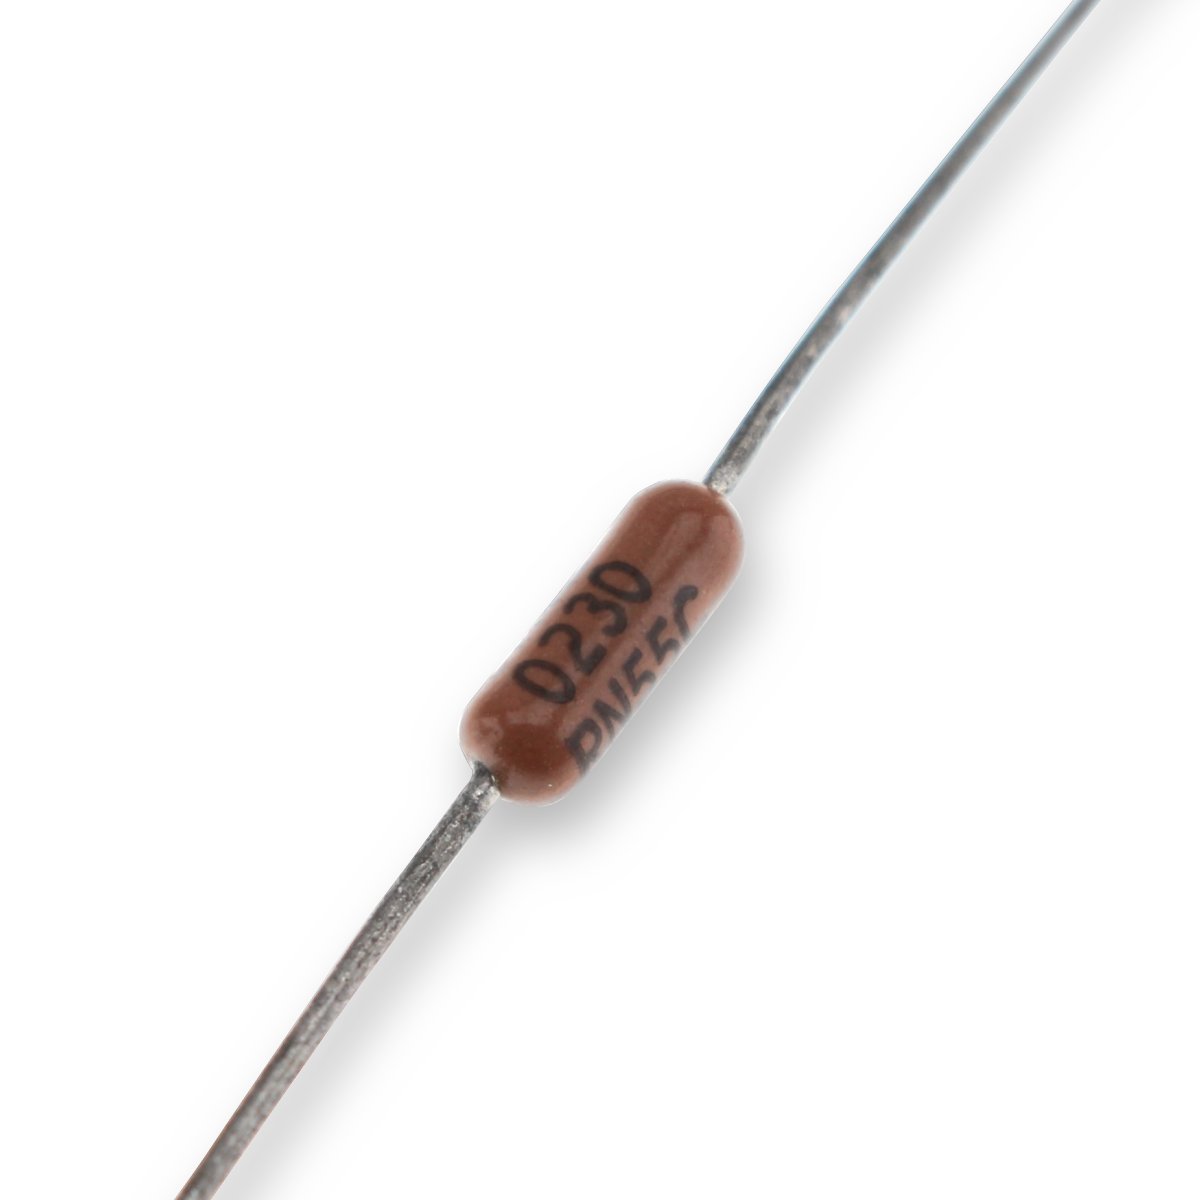 VISHAY DALE CMF55 Resistor 1% 50ppm 196 Ohm